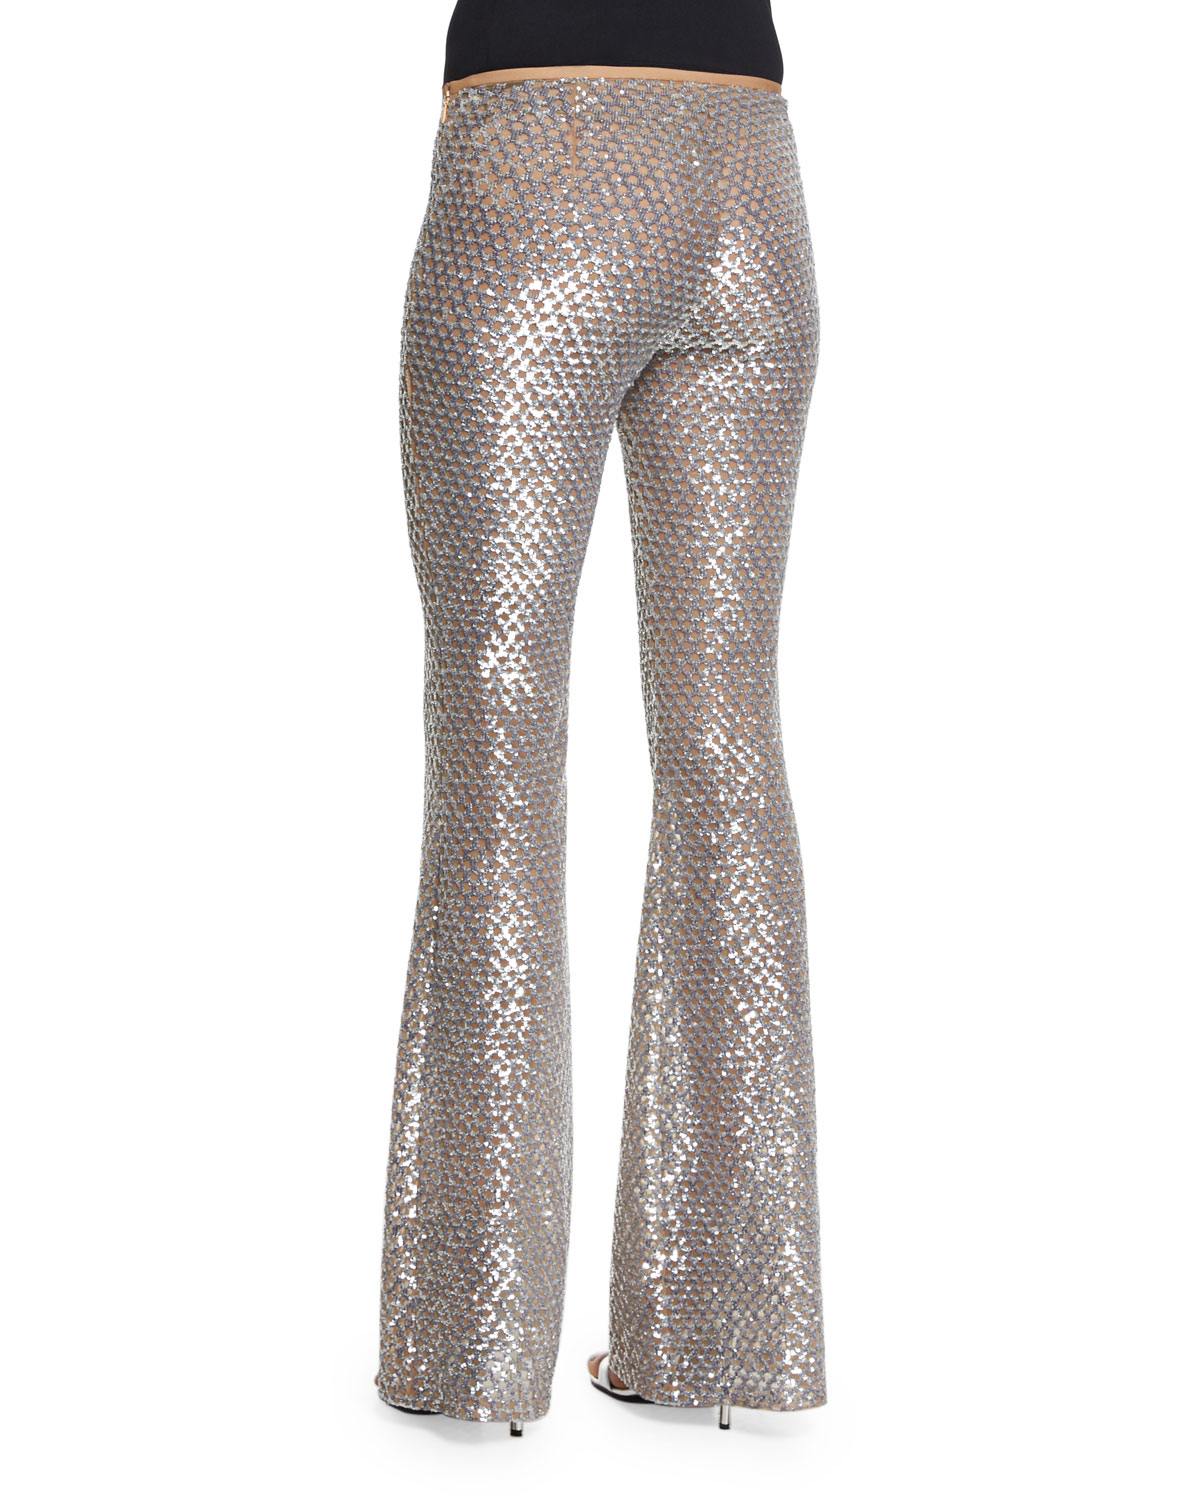 Michael kors Embellished Flare Pants in Metallic | Lyst